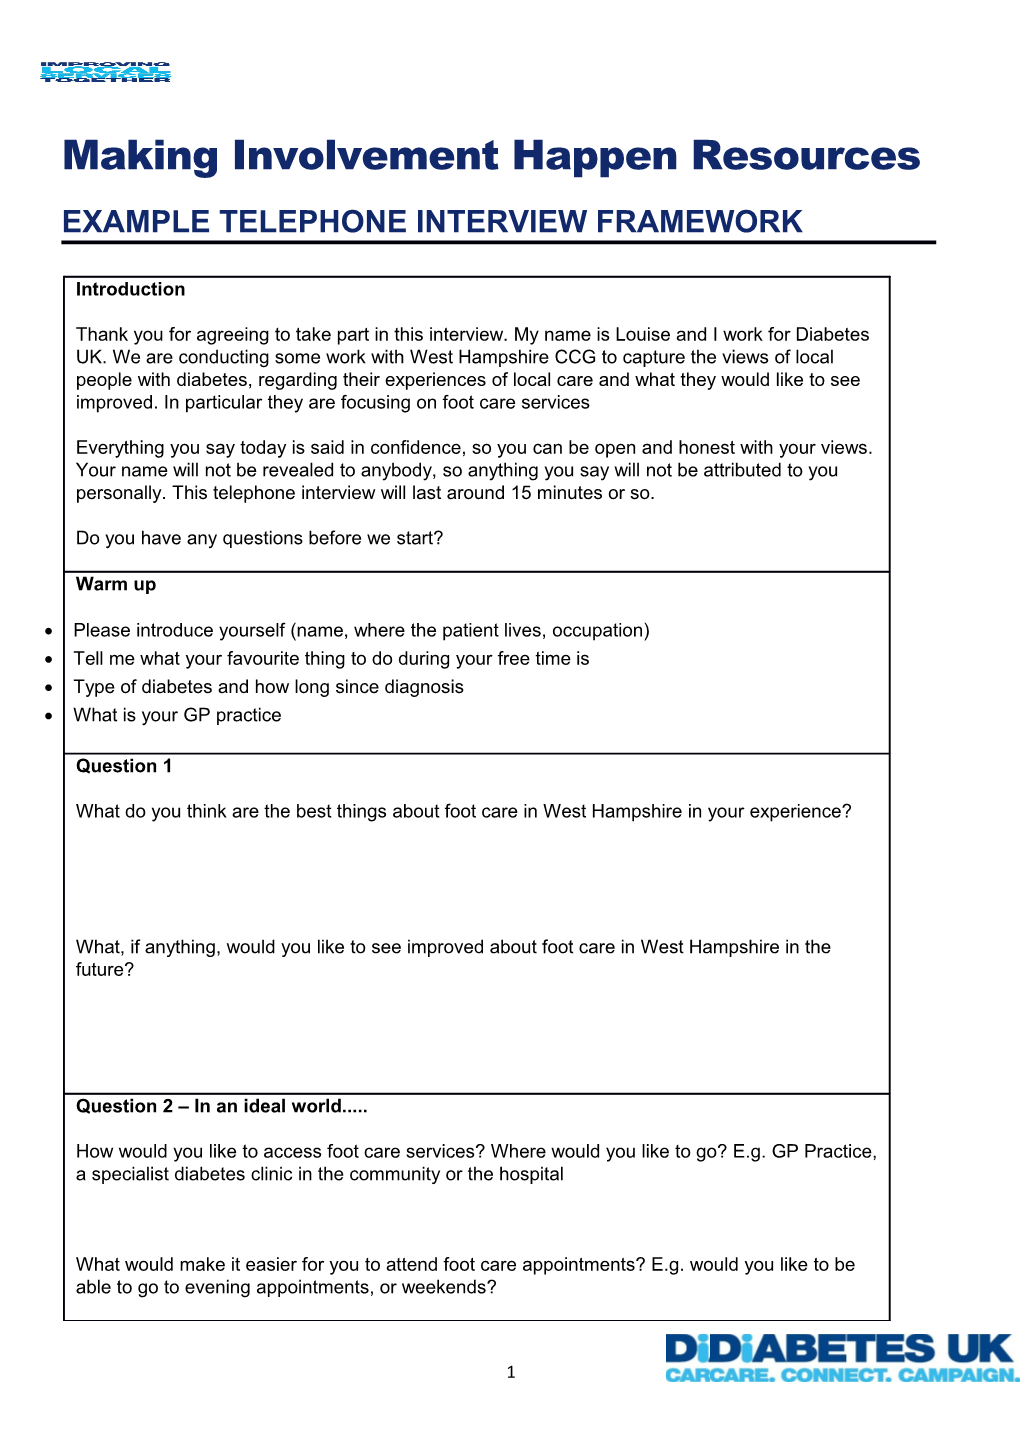 Example Telephone Interview Framework